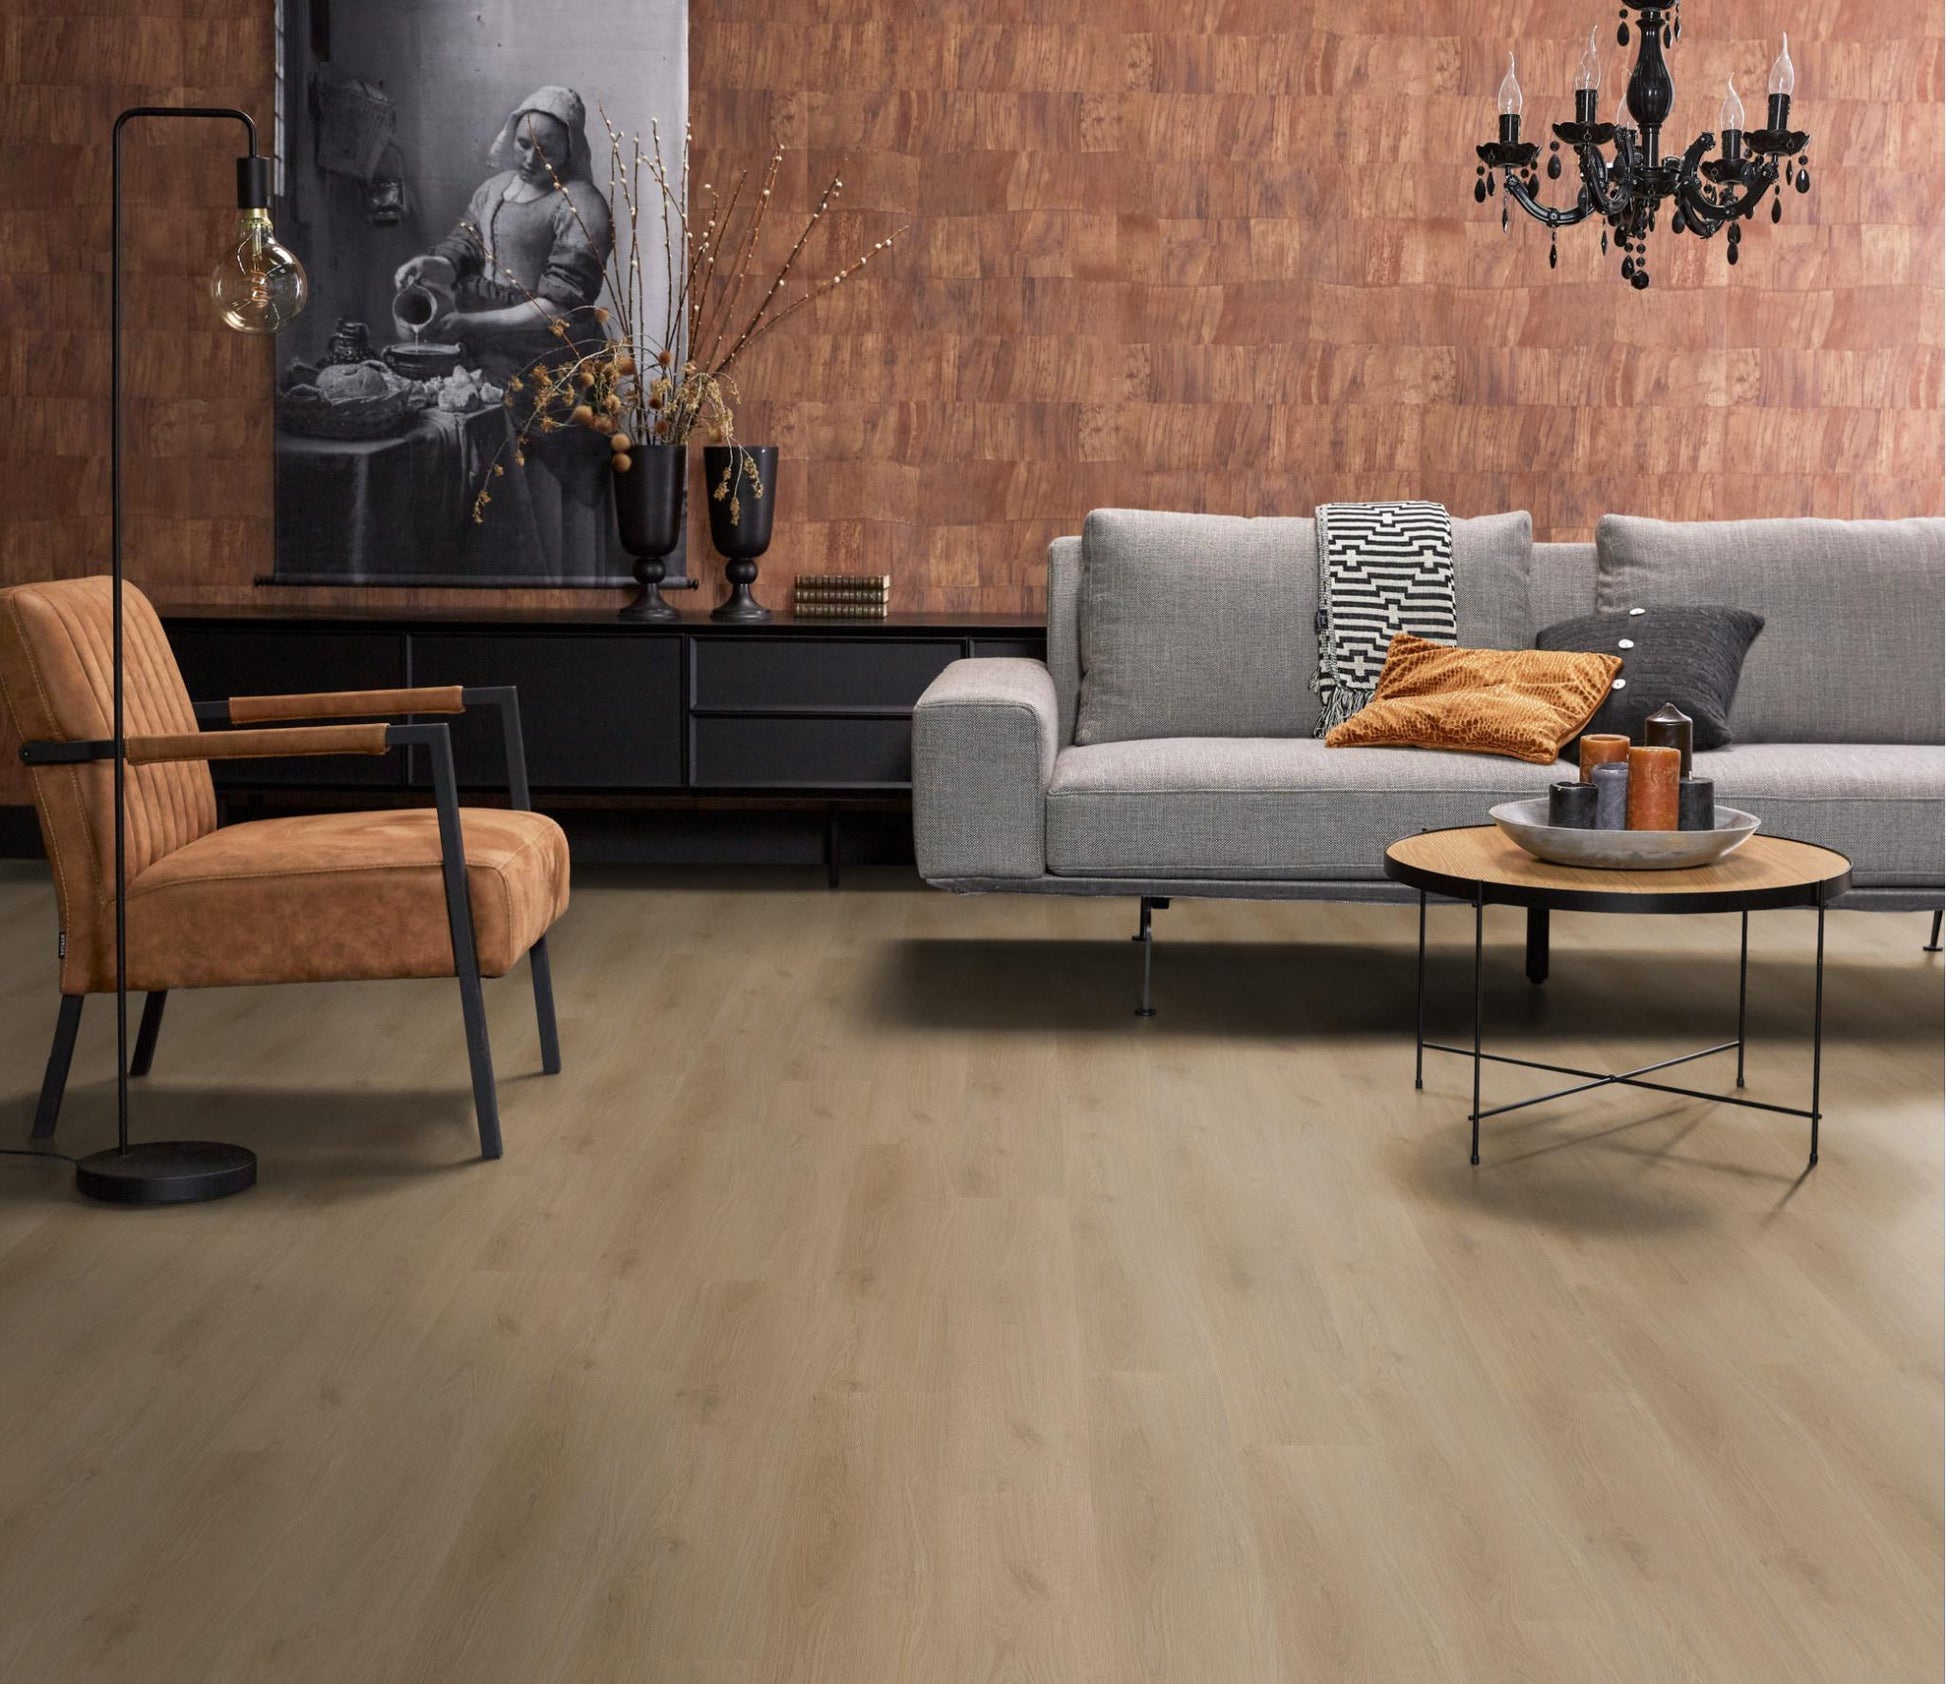 Floorlife Click PVC Merton Natural Oak 7512 - Solza.nl